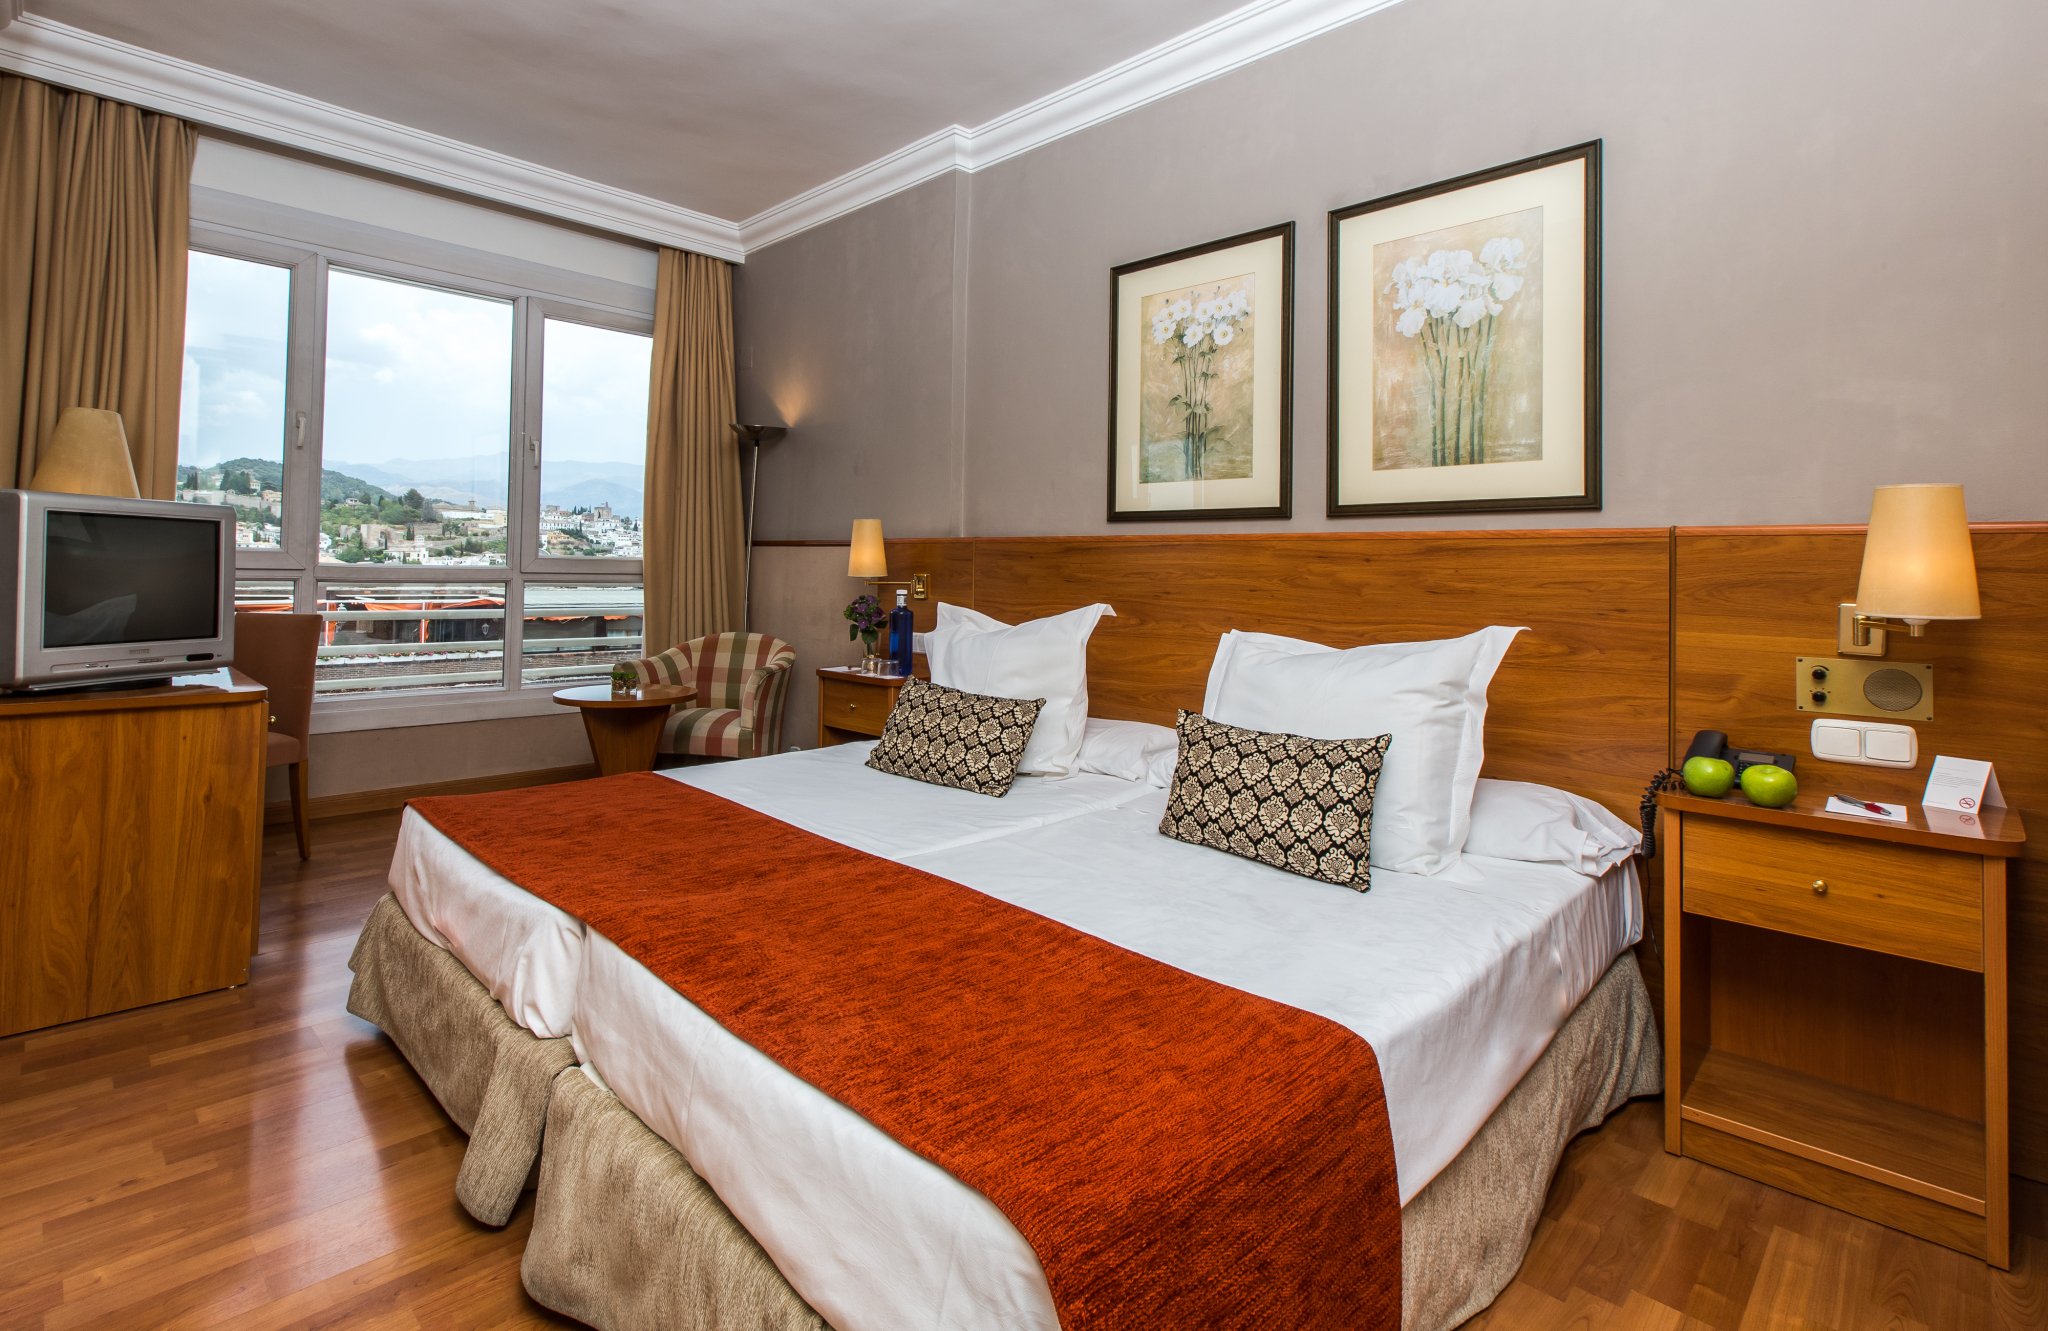 Leonardo Hotel Granada - Superior Room